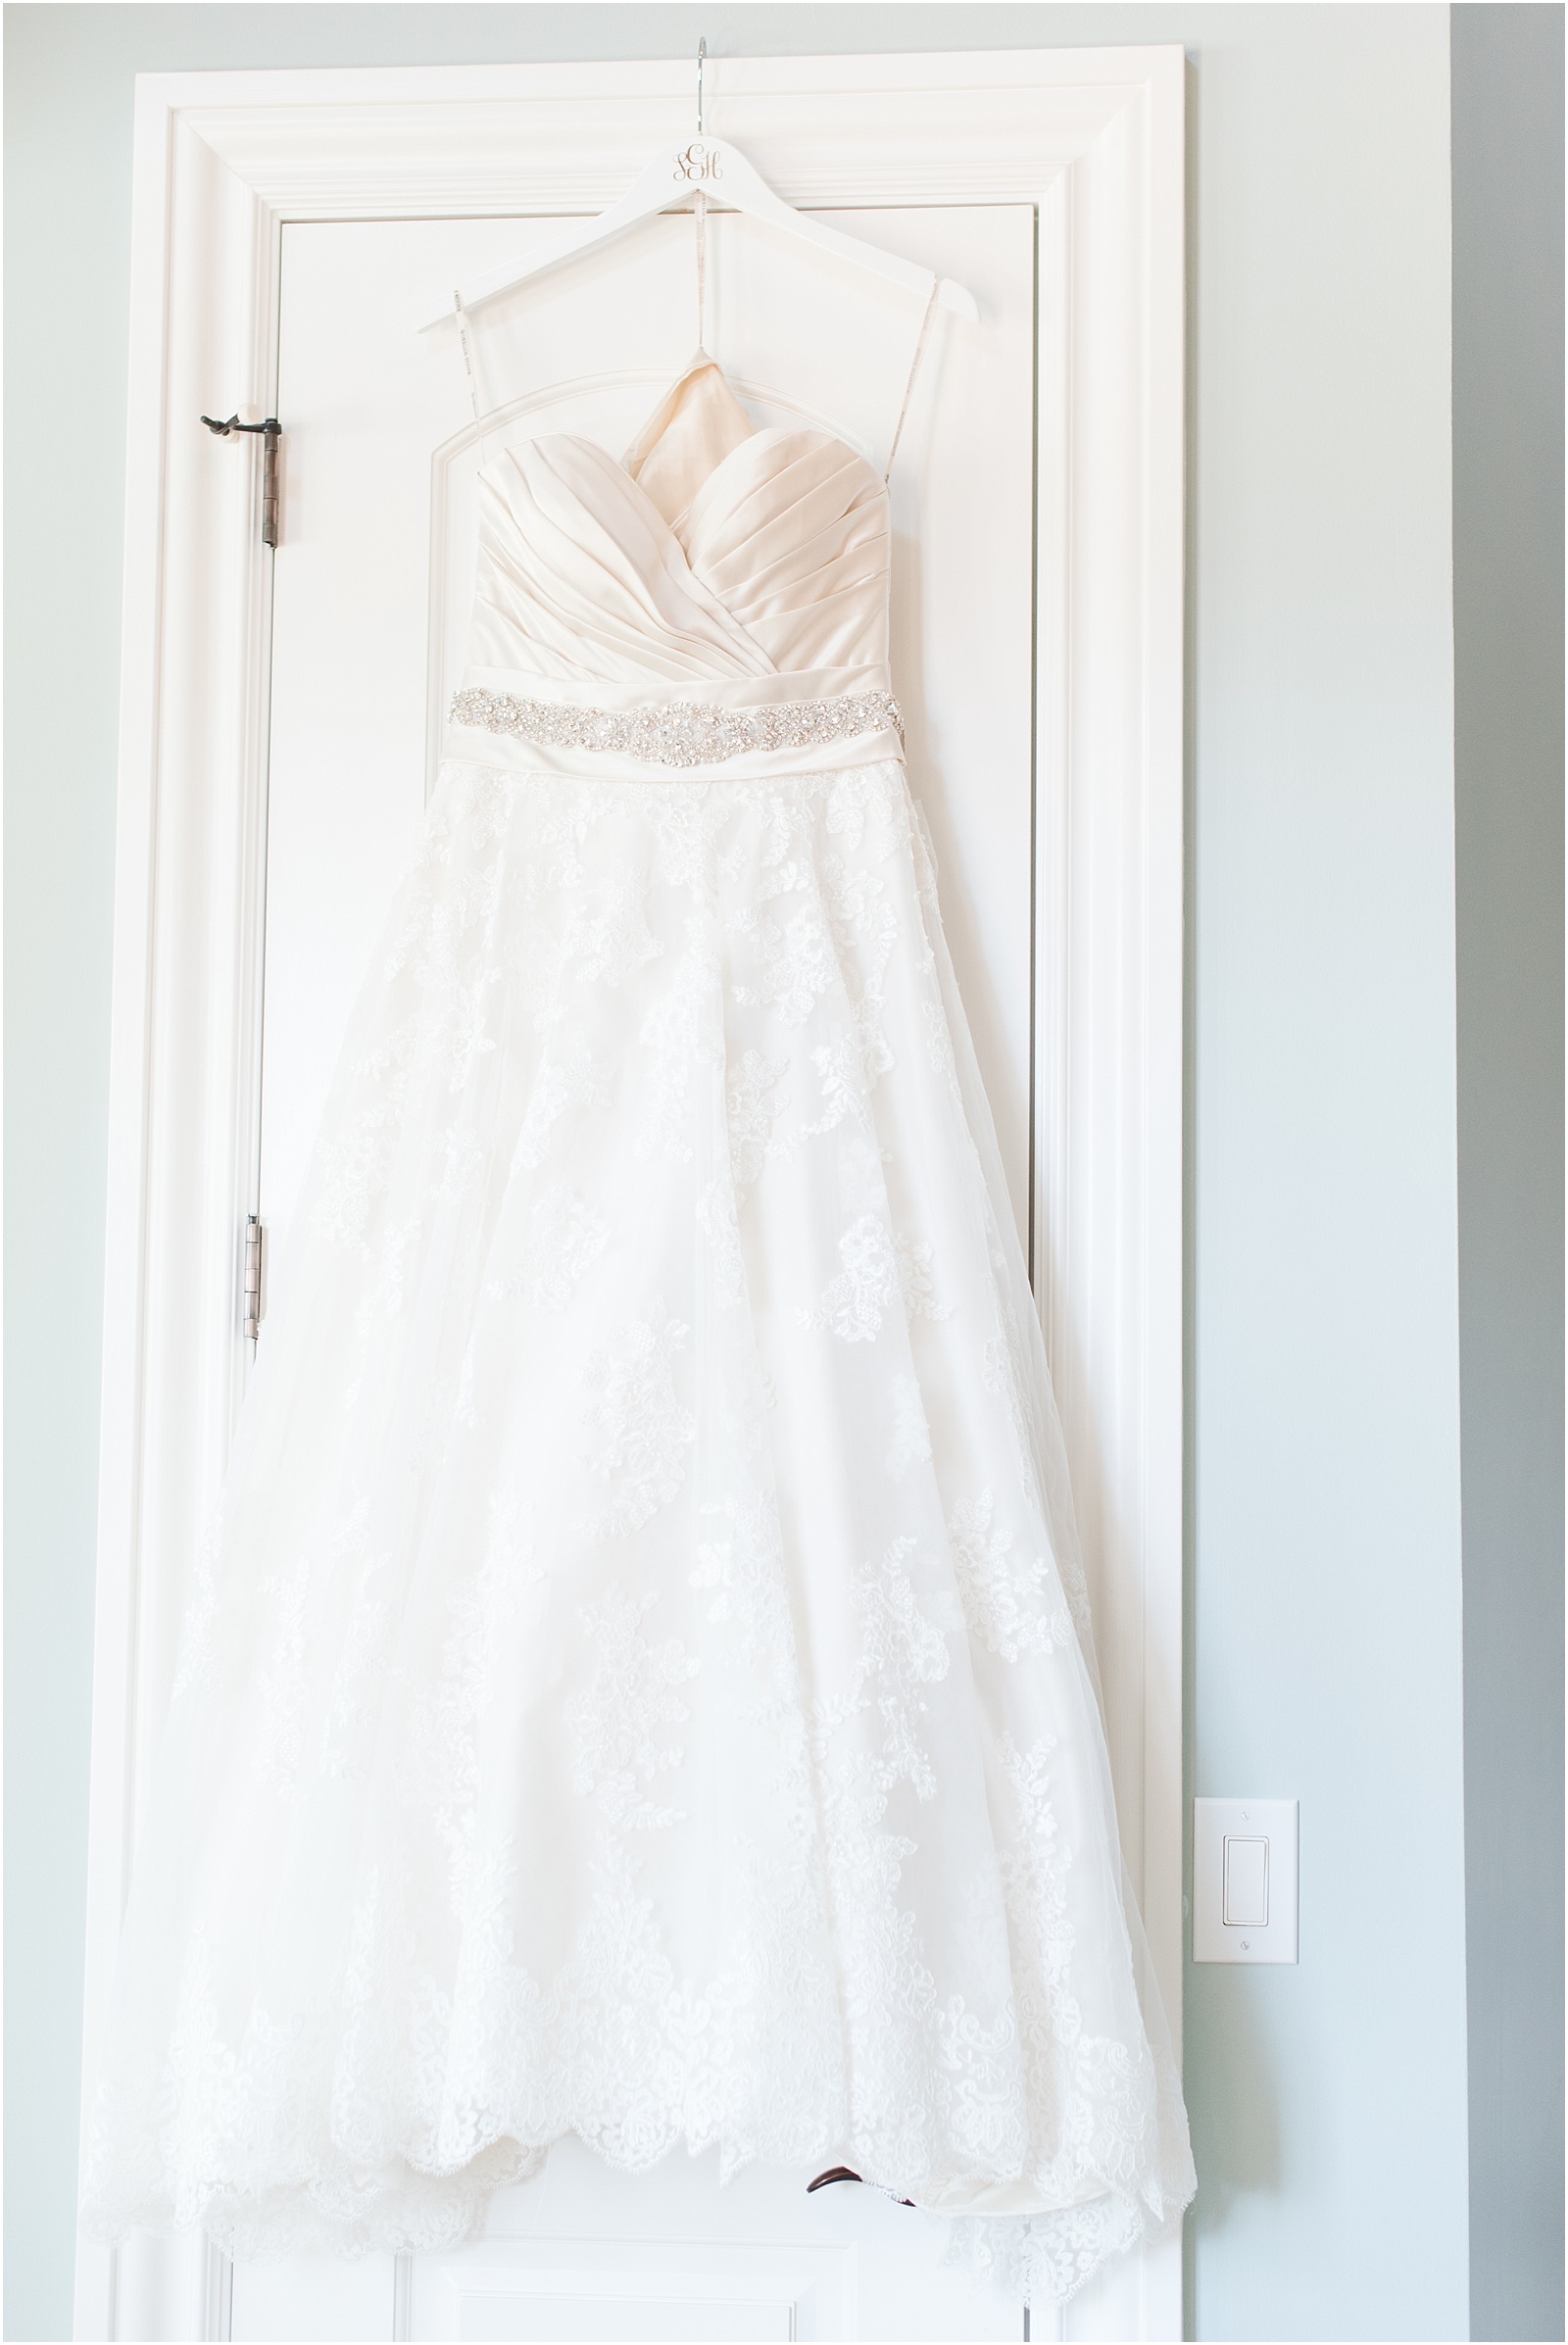 A Country Chic Starlight Meadows Wedding, Burlington NC, wedding dress, wedding details, strapless wedding dress, outdoor wedding